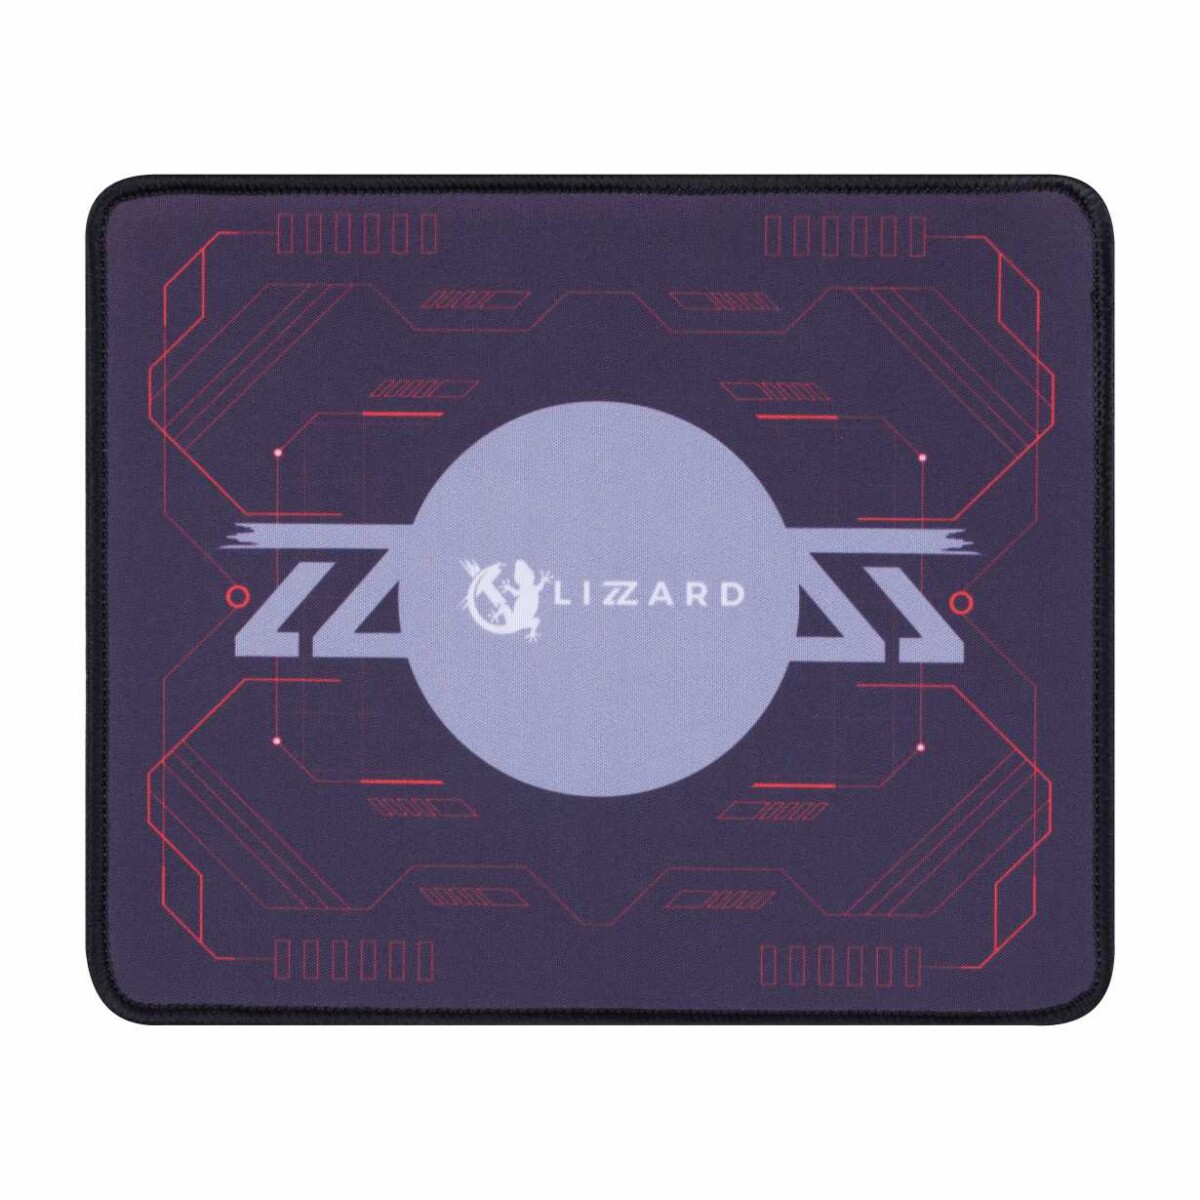 Combo Gamer Completo XZZ-CO-02 4 en 1 X-lizzard - 001 